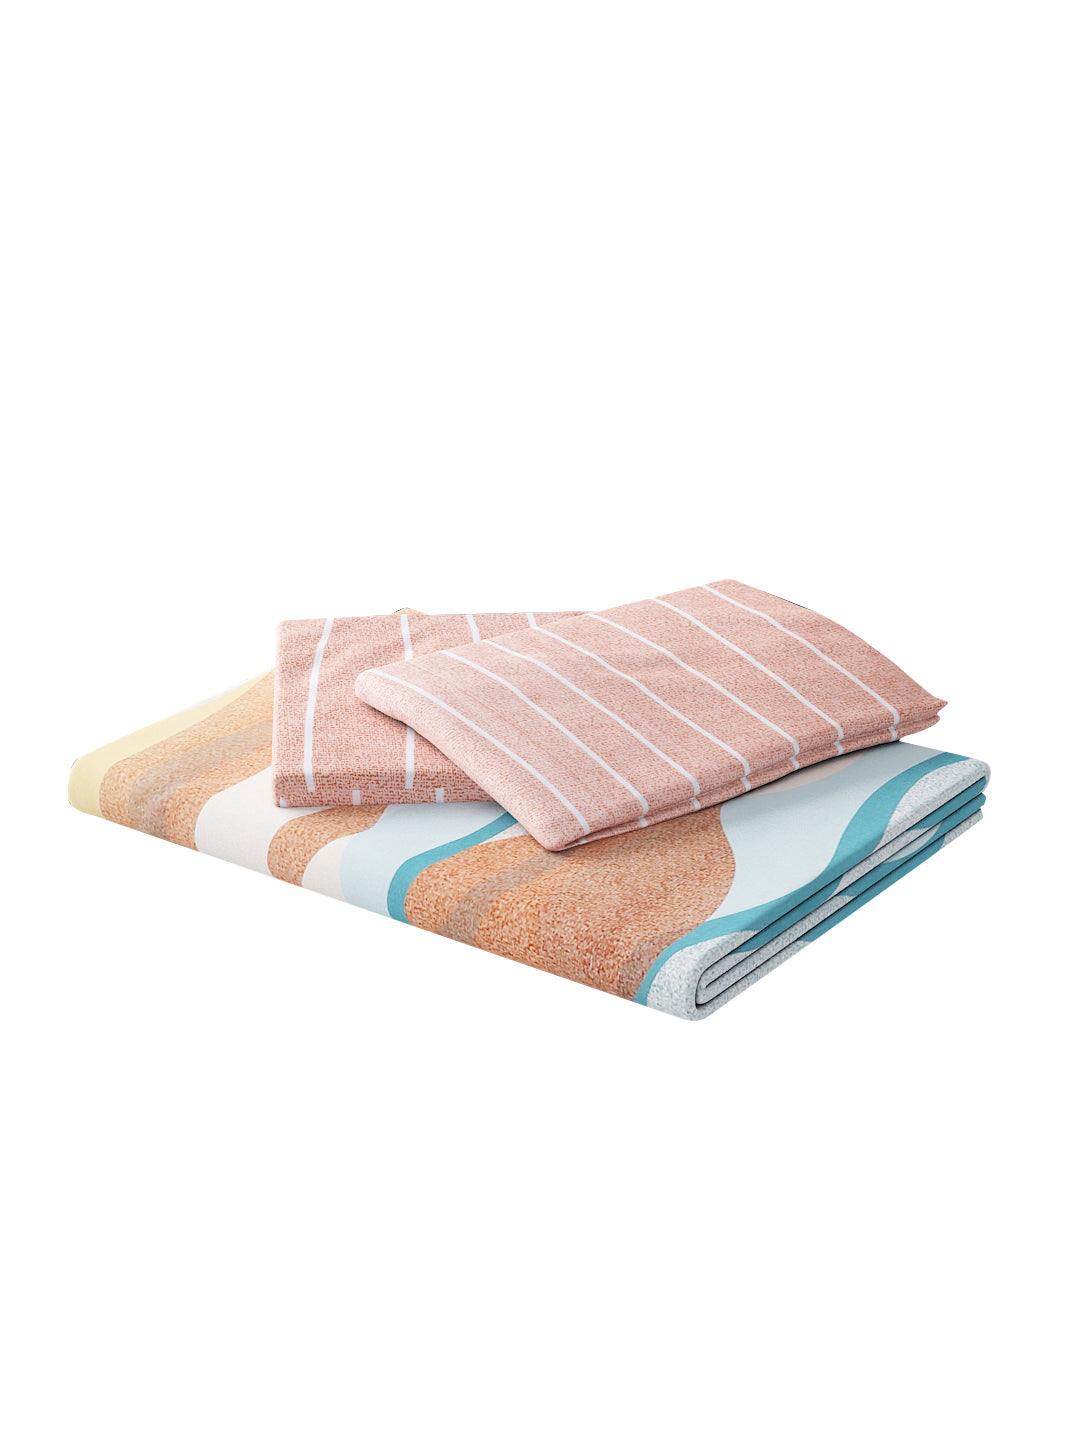 144 TC Cotton Double Bed Bedsheet With 2 Pillow Covers- Multicolor & Aqua blue